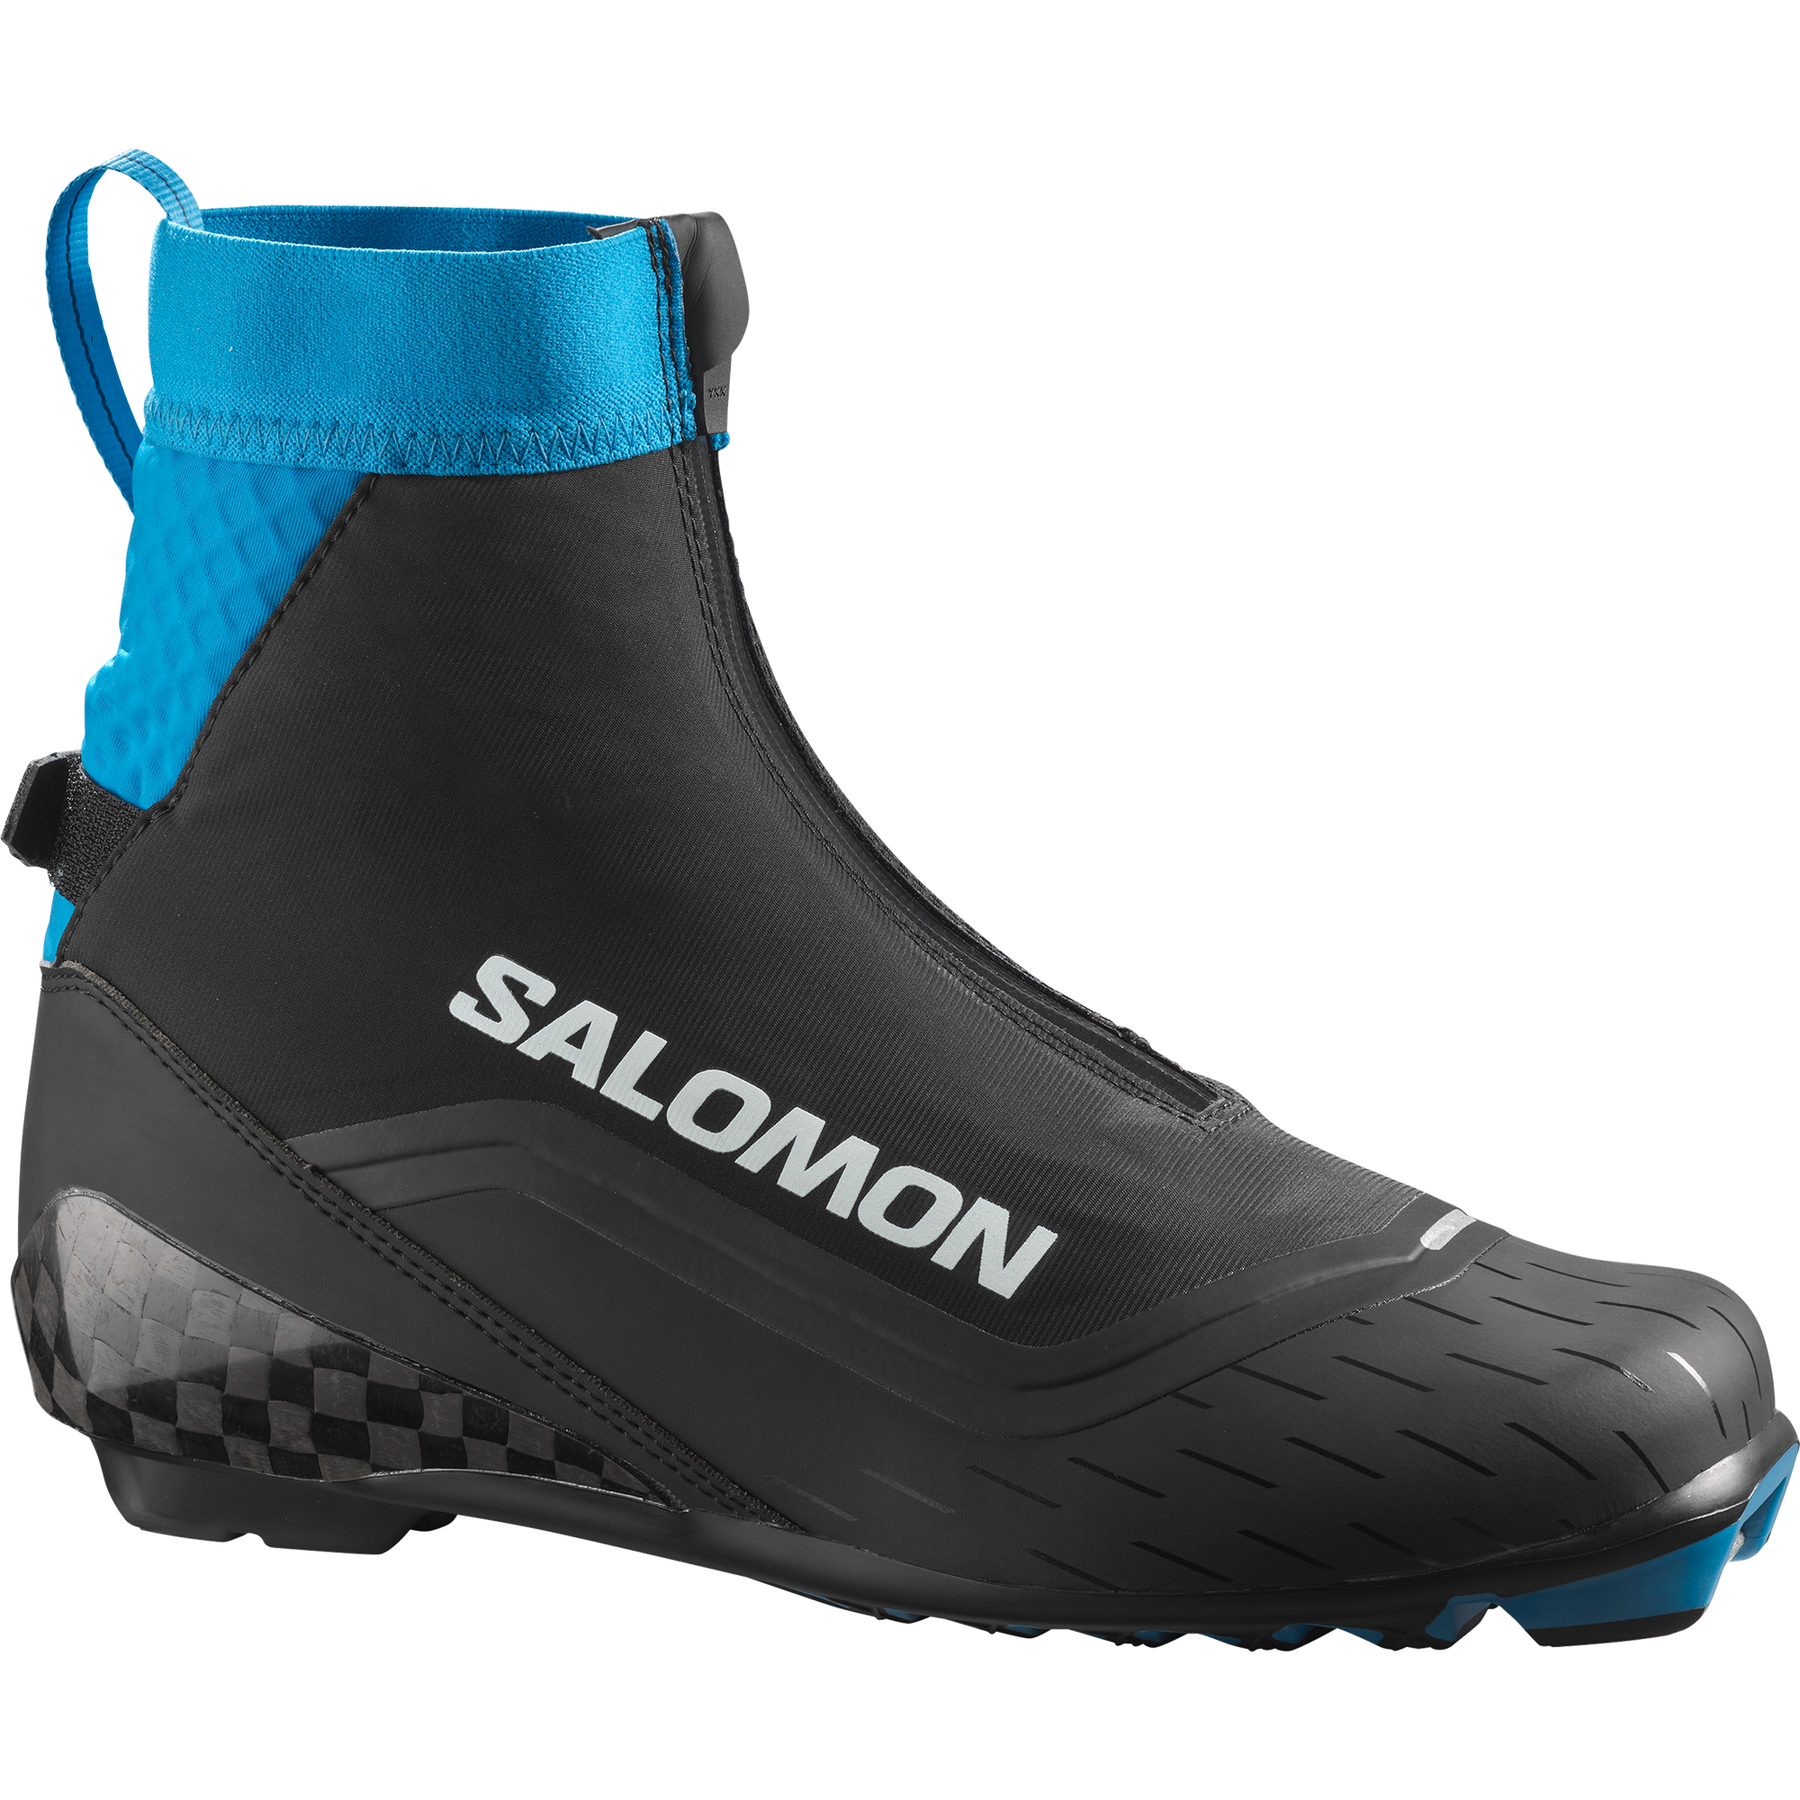 Salomon S/Max Carbon Classic Prolink